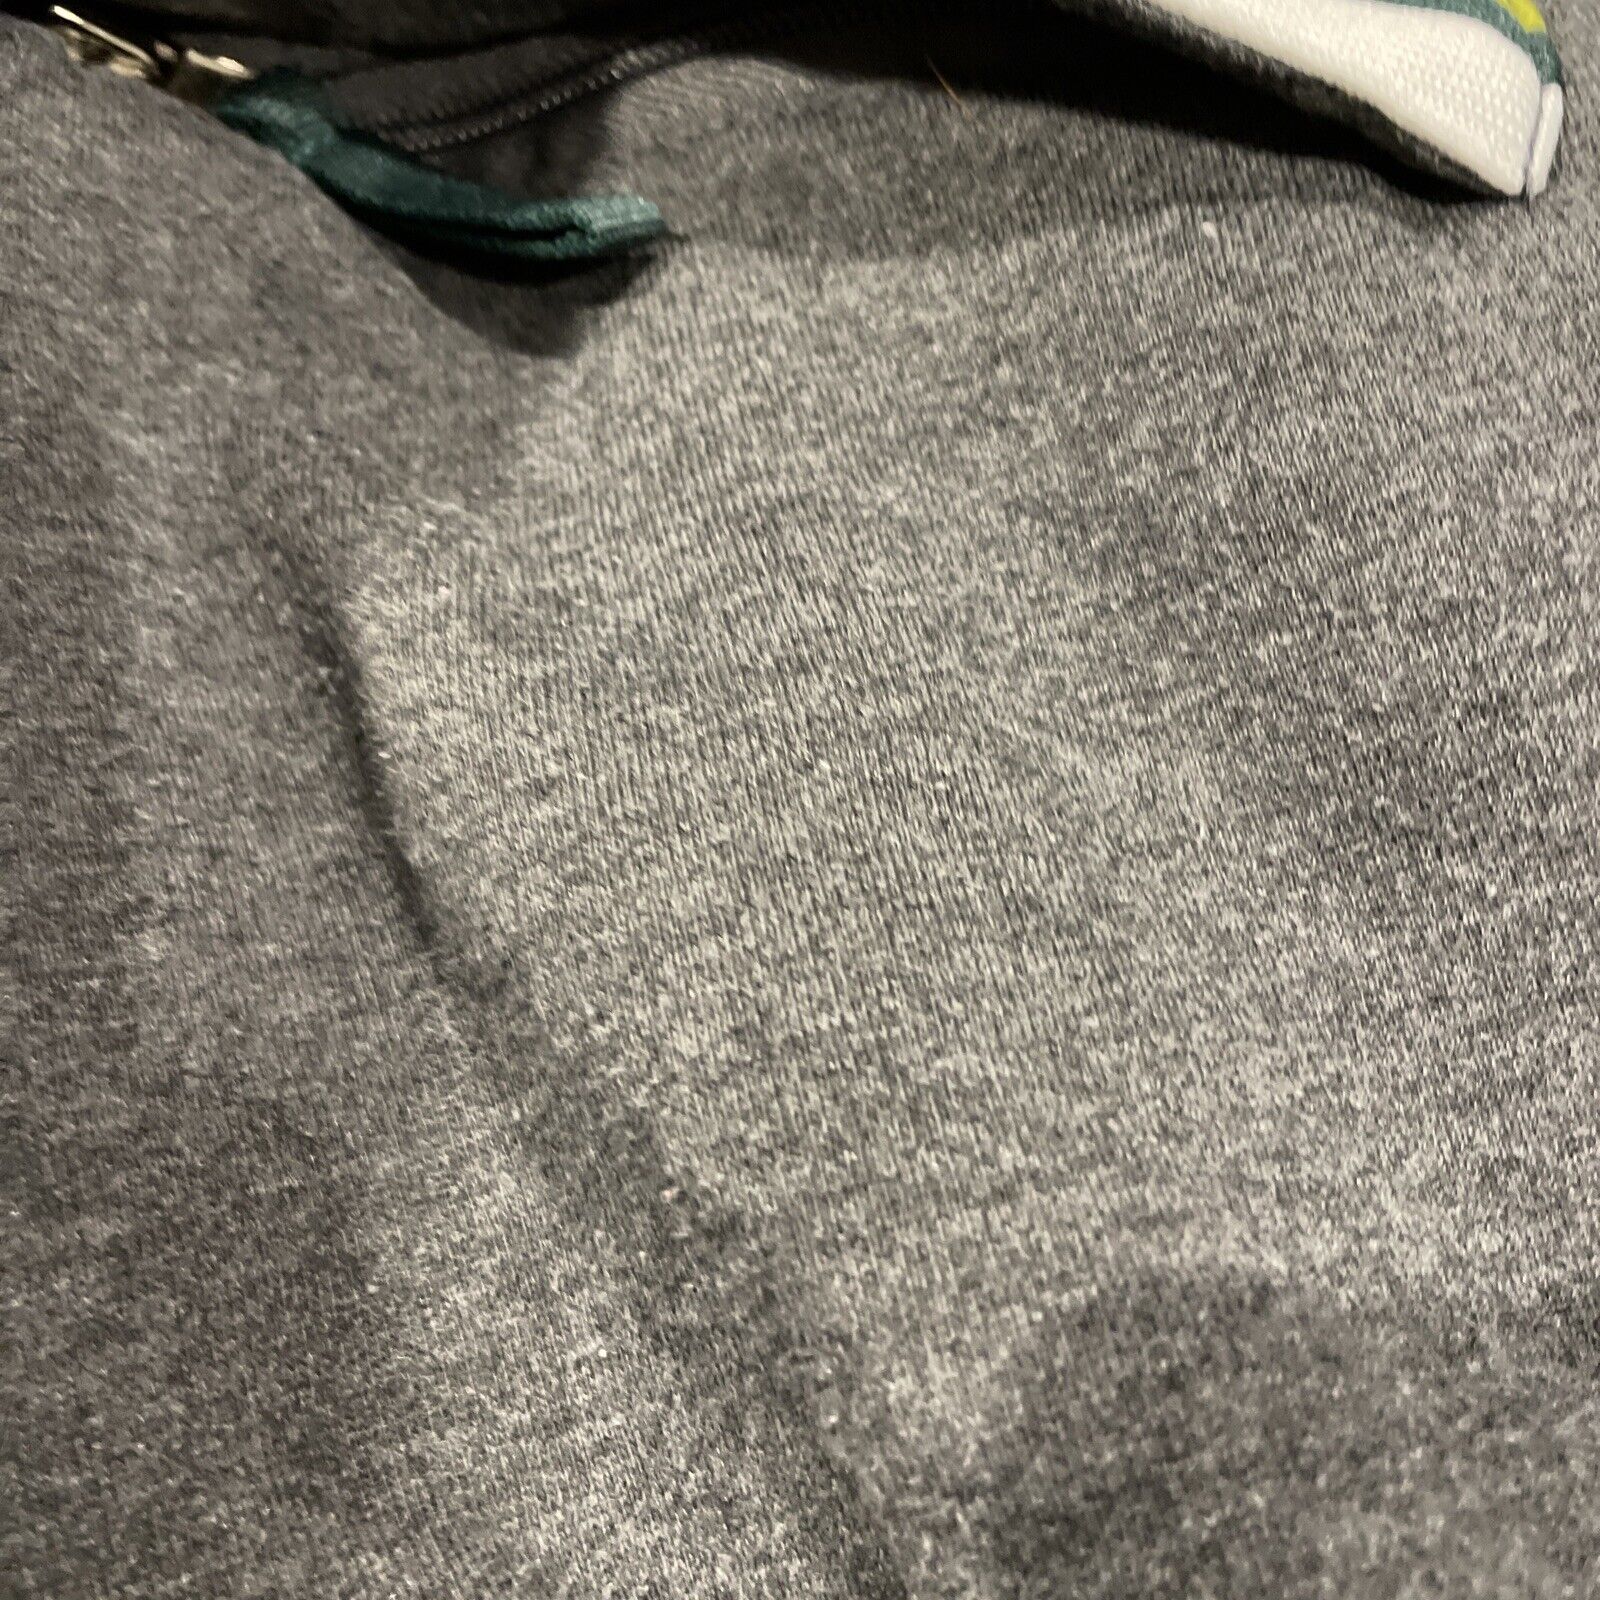 Harlem Globetrotters 75th Anniversary Zip Up Sweatshirt Platinum Fubu ...